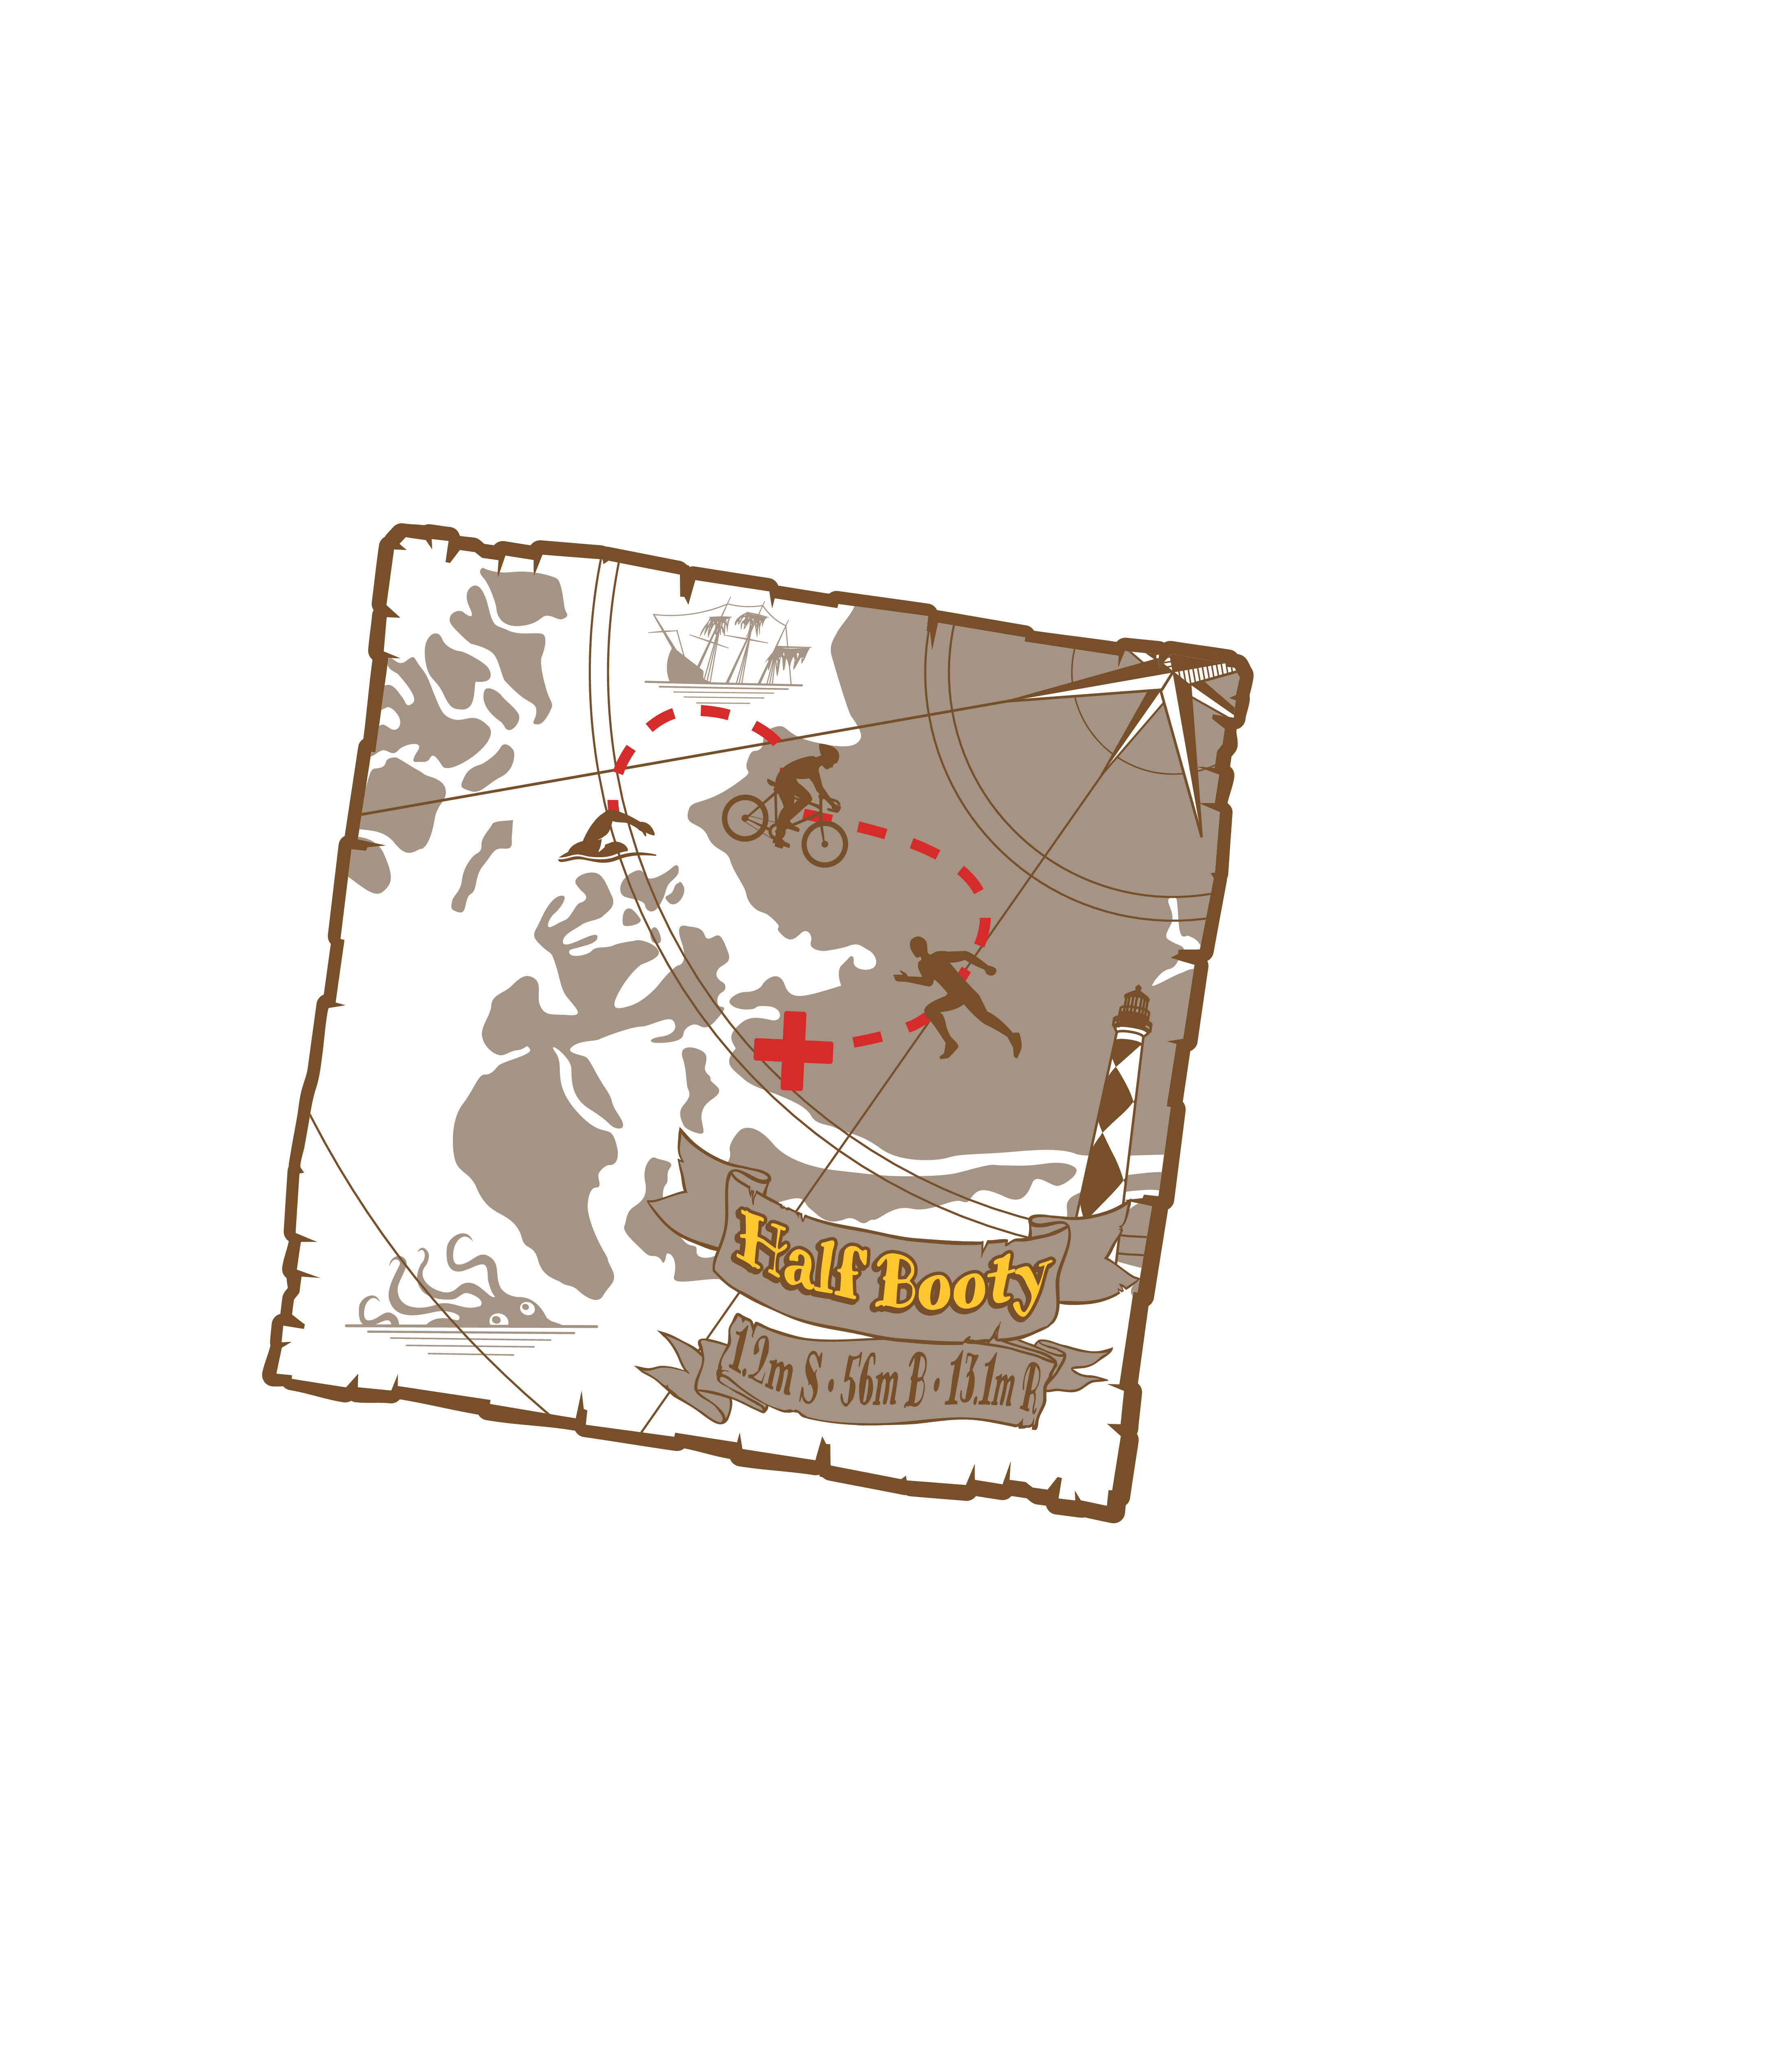 Crystal Coast Half Booty Triathlon